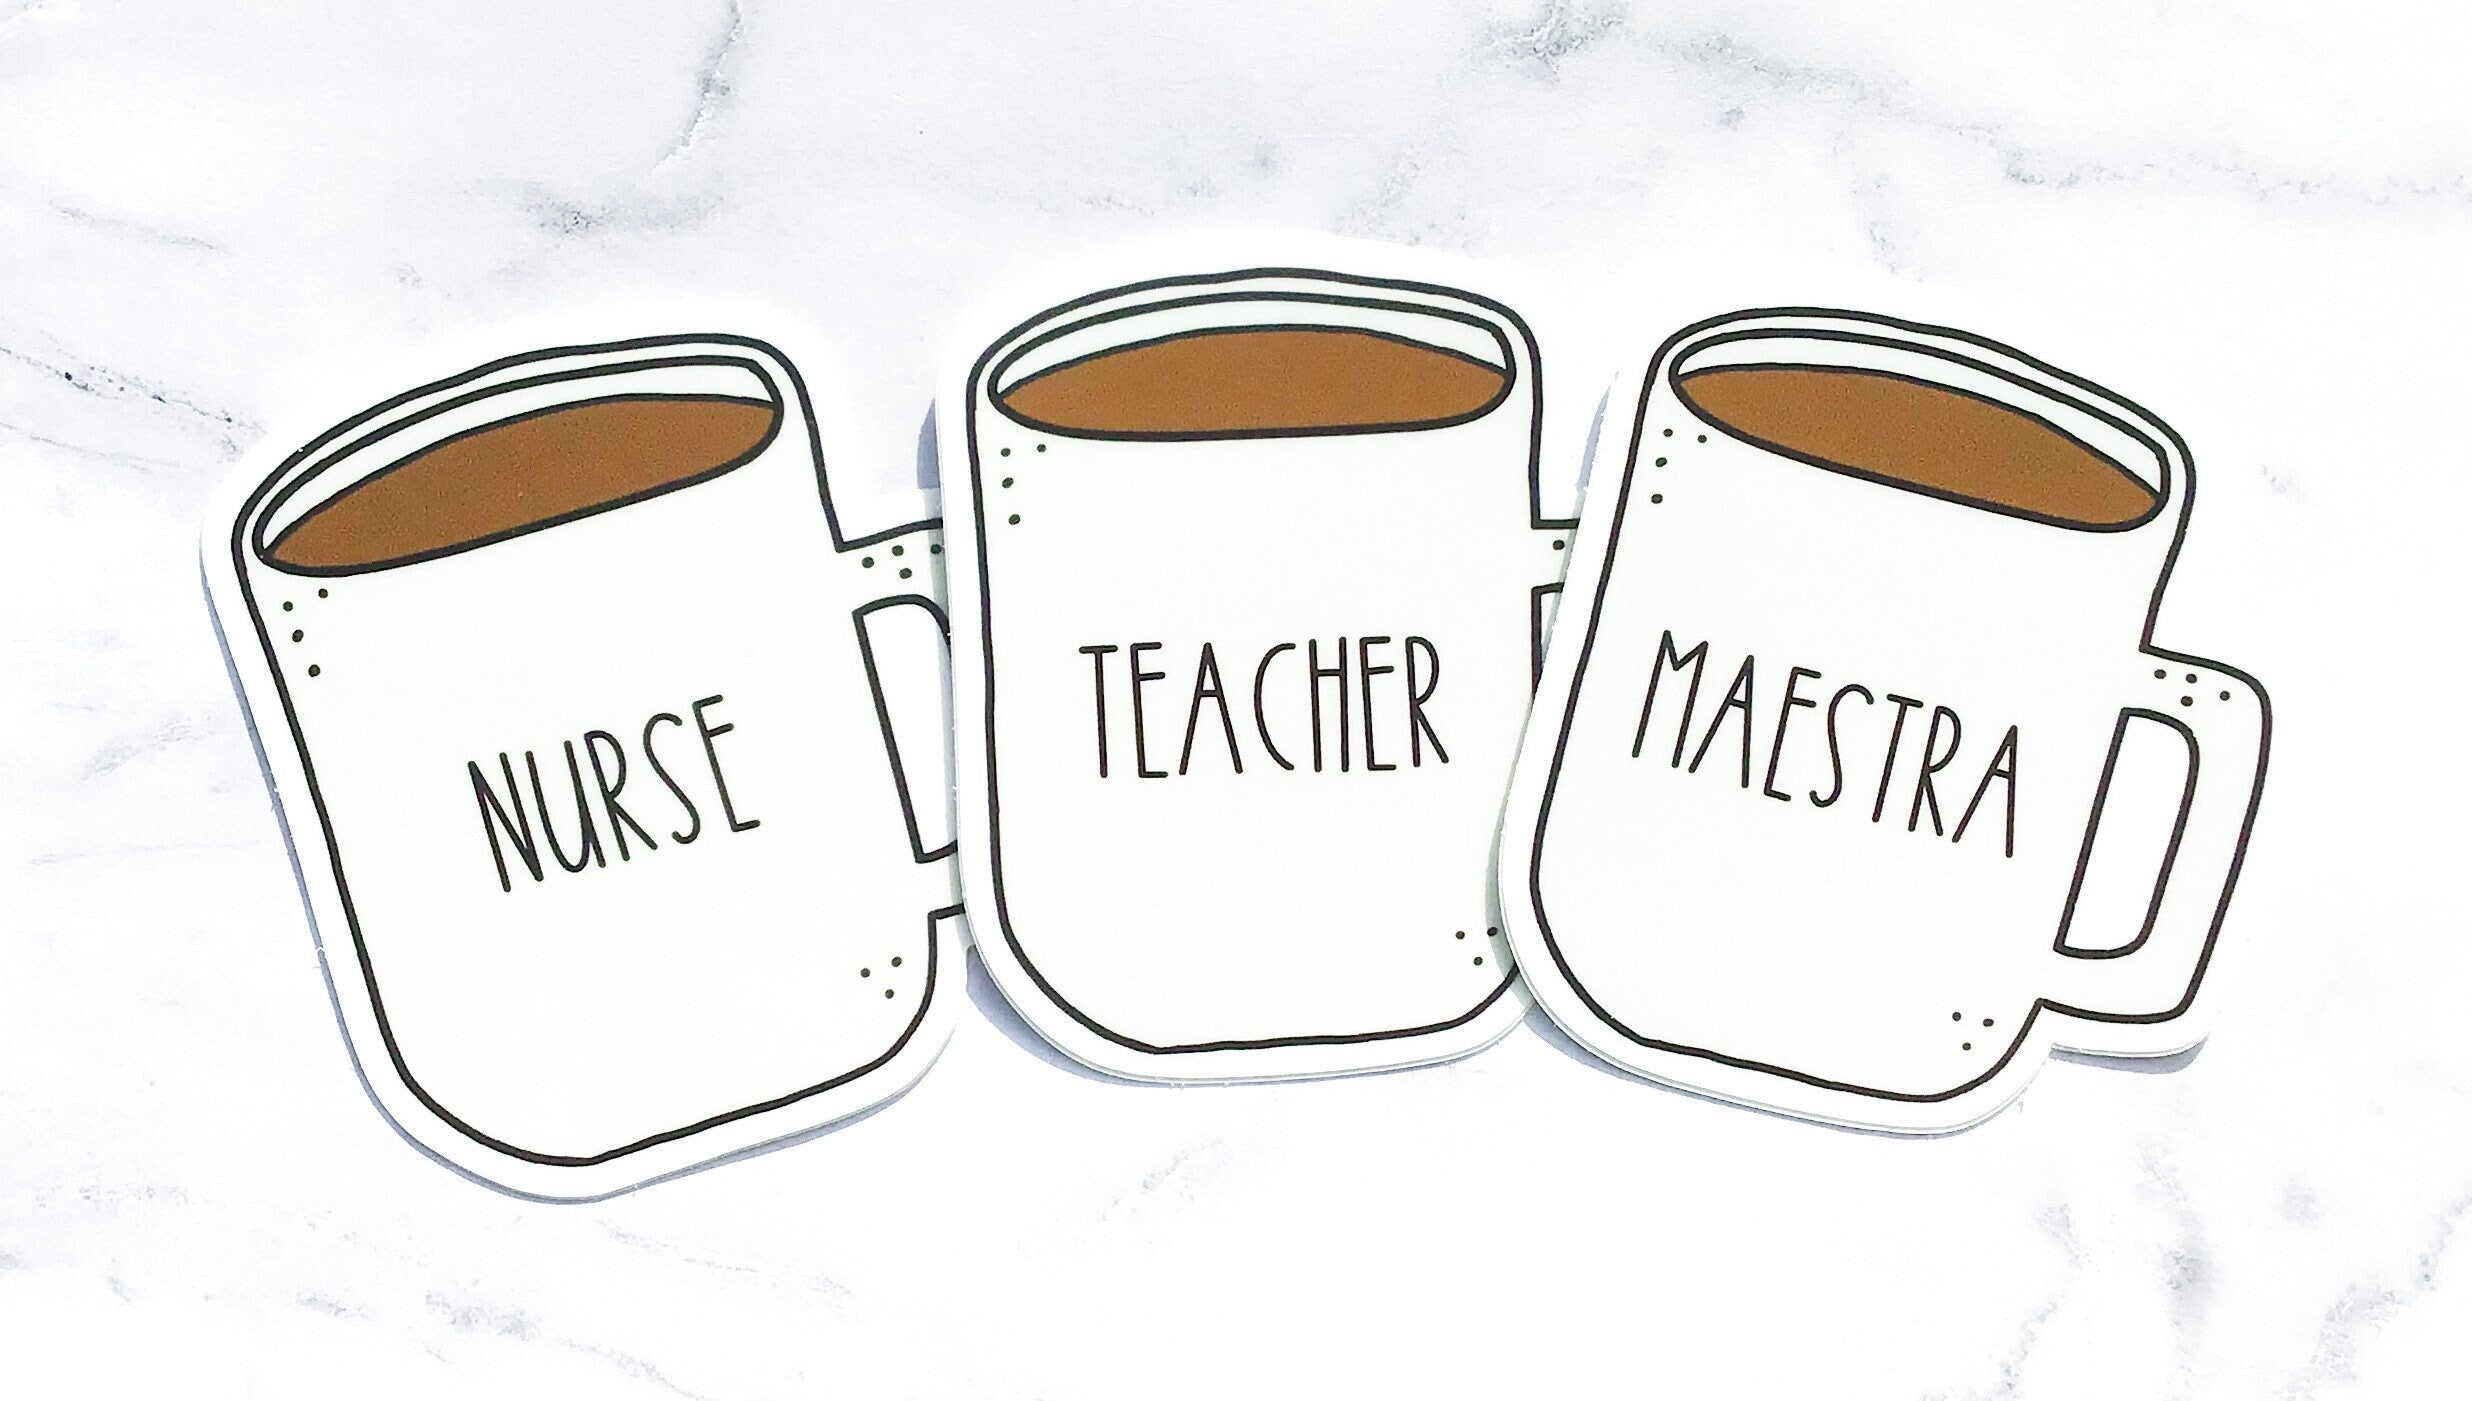 Teacher/Maestra/Nurse Rae Dunn Coffee Mug Sticker